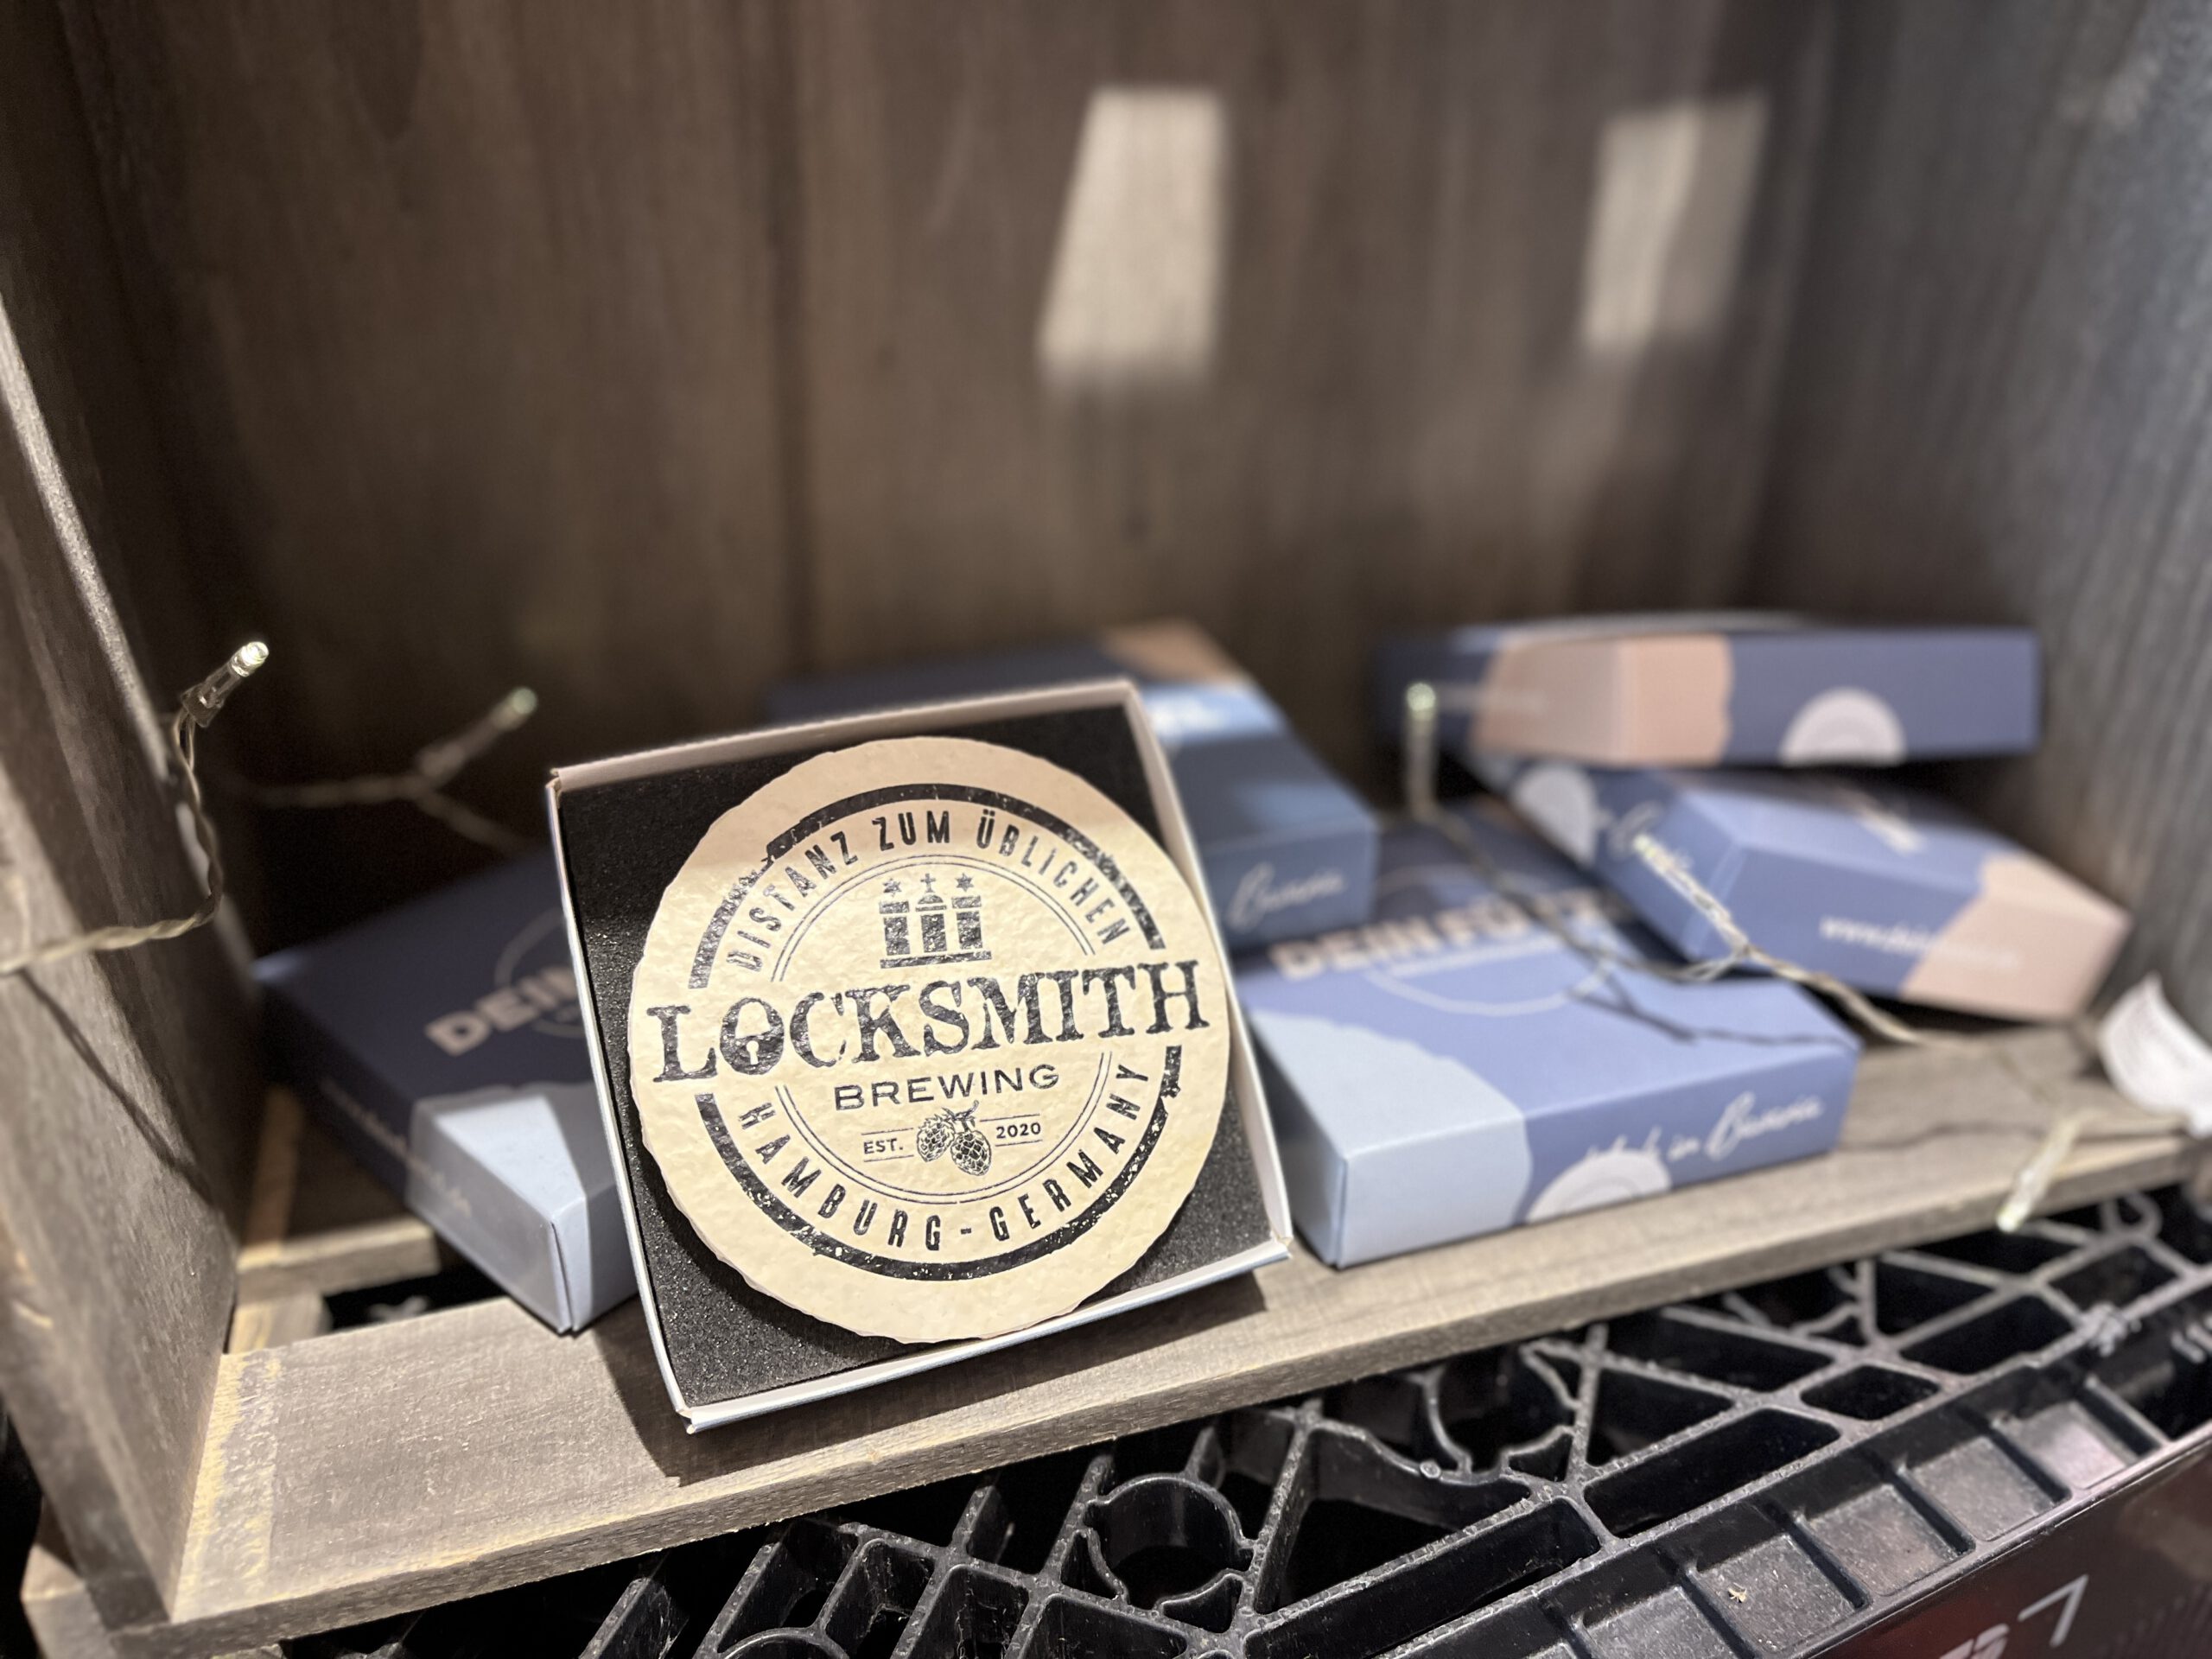 Locksmith Brewing